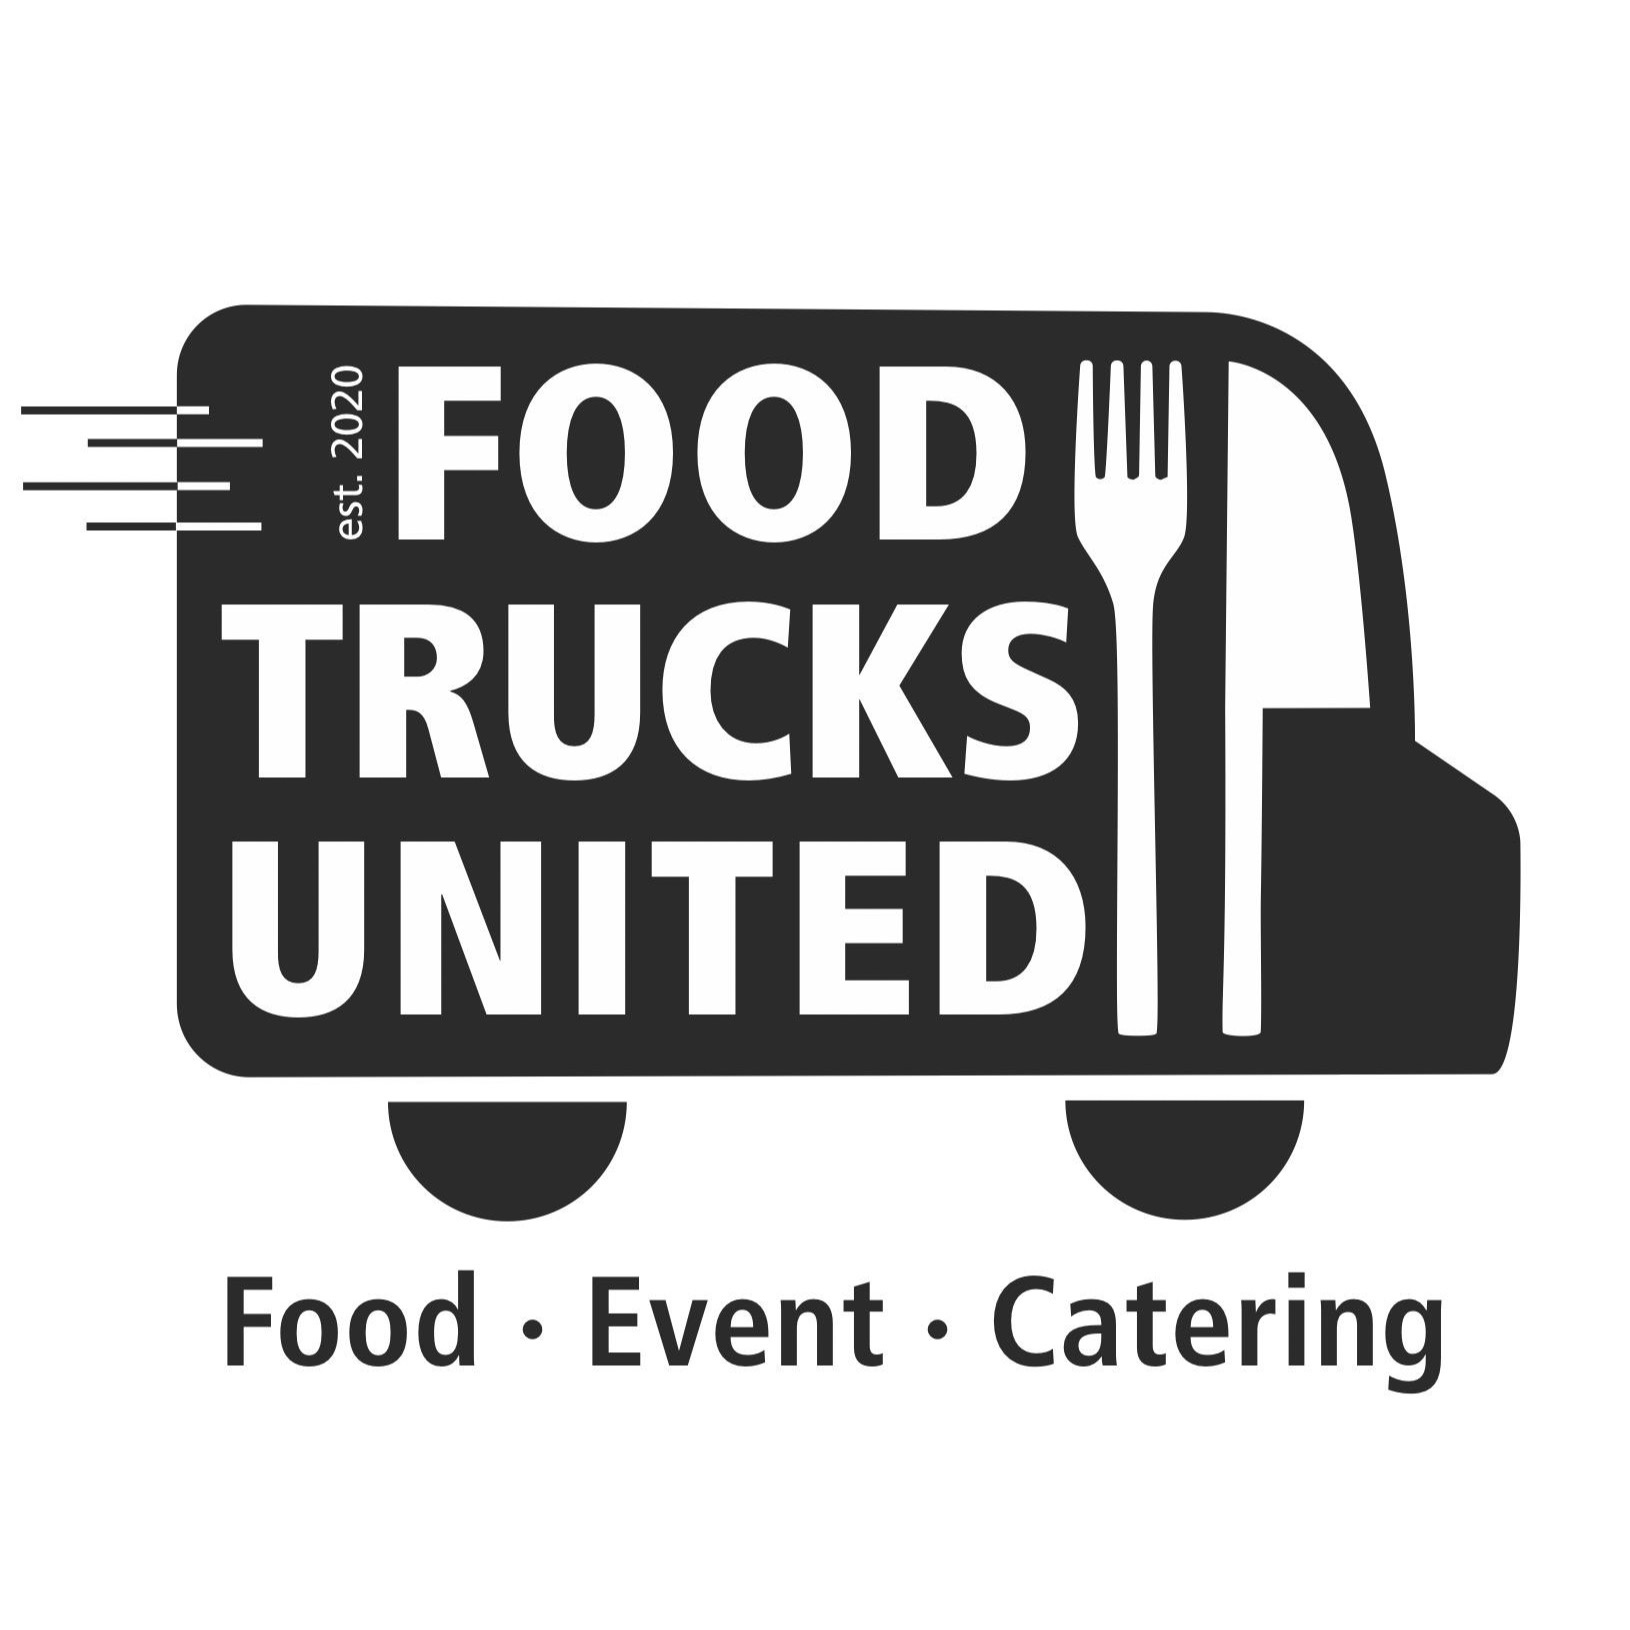 Food Trucks United Logo - über 100 Food Trucks in einer Community